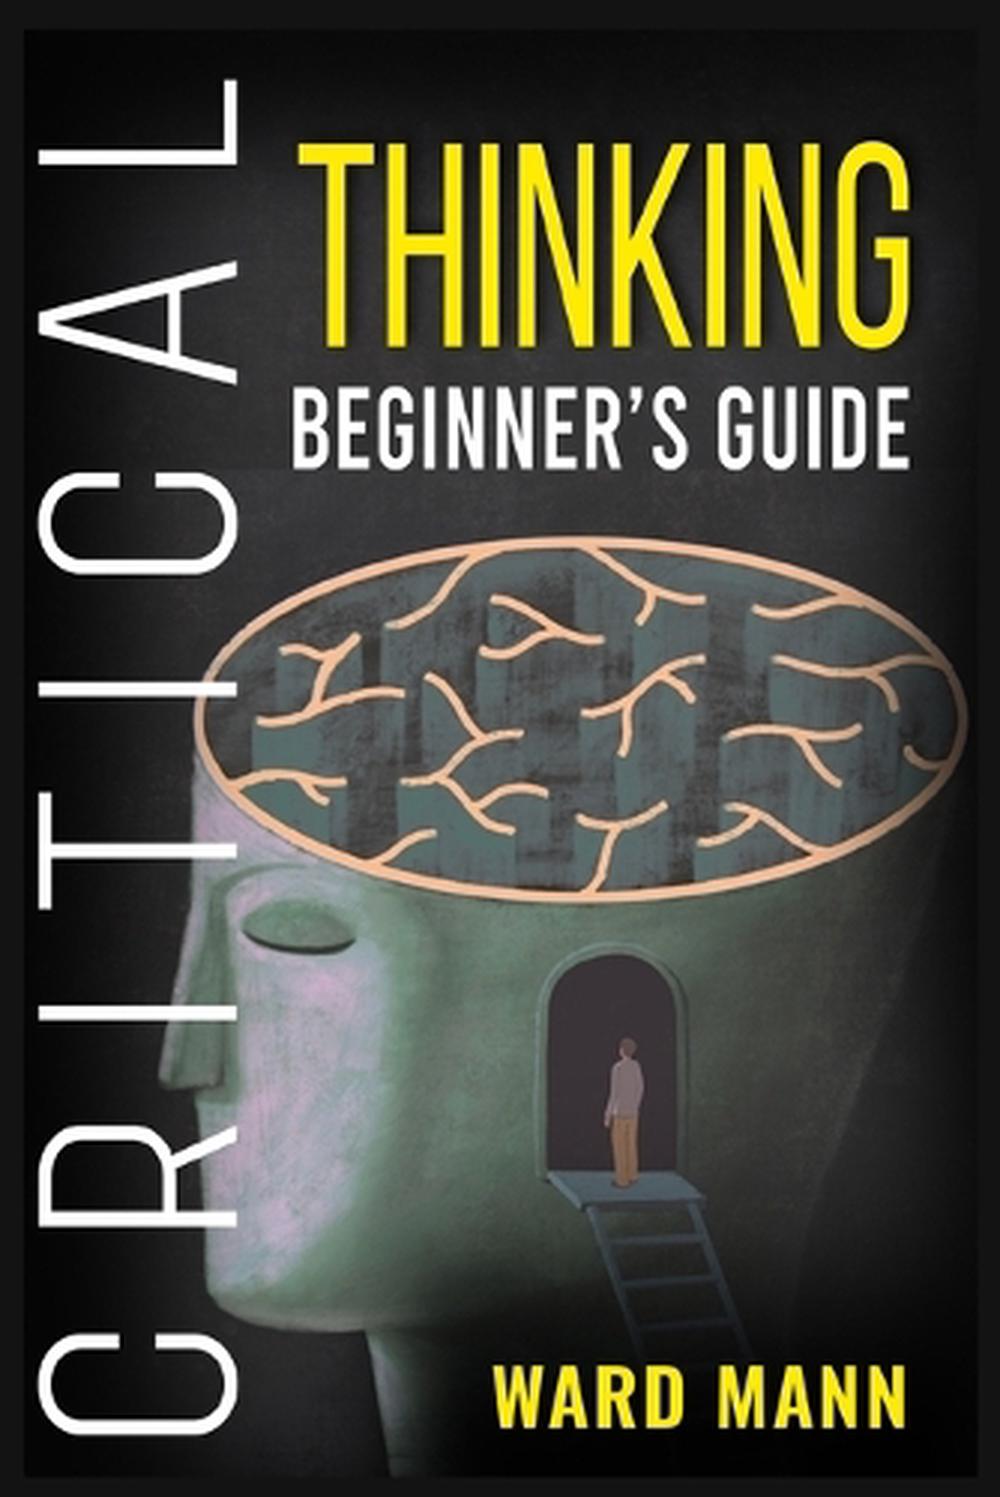 david pakman book critical thinking